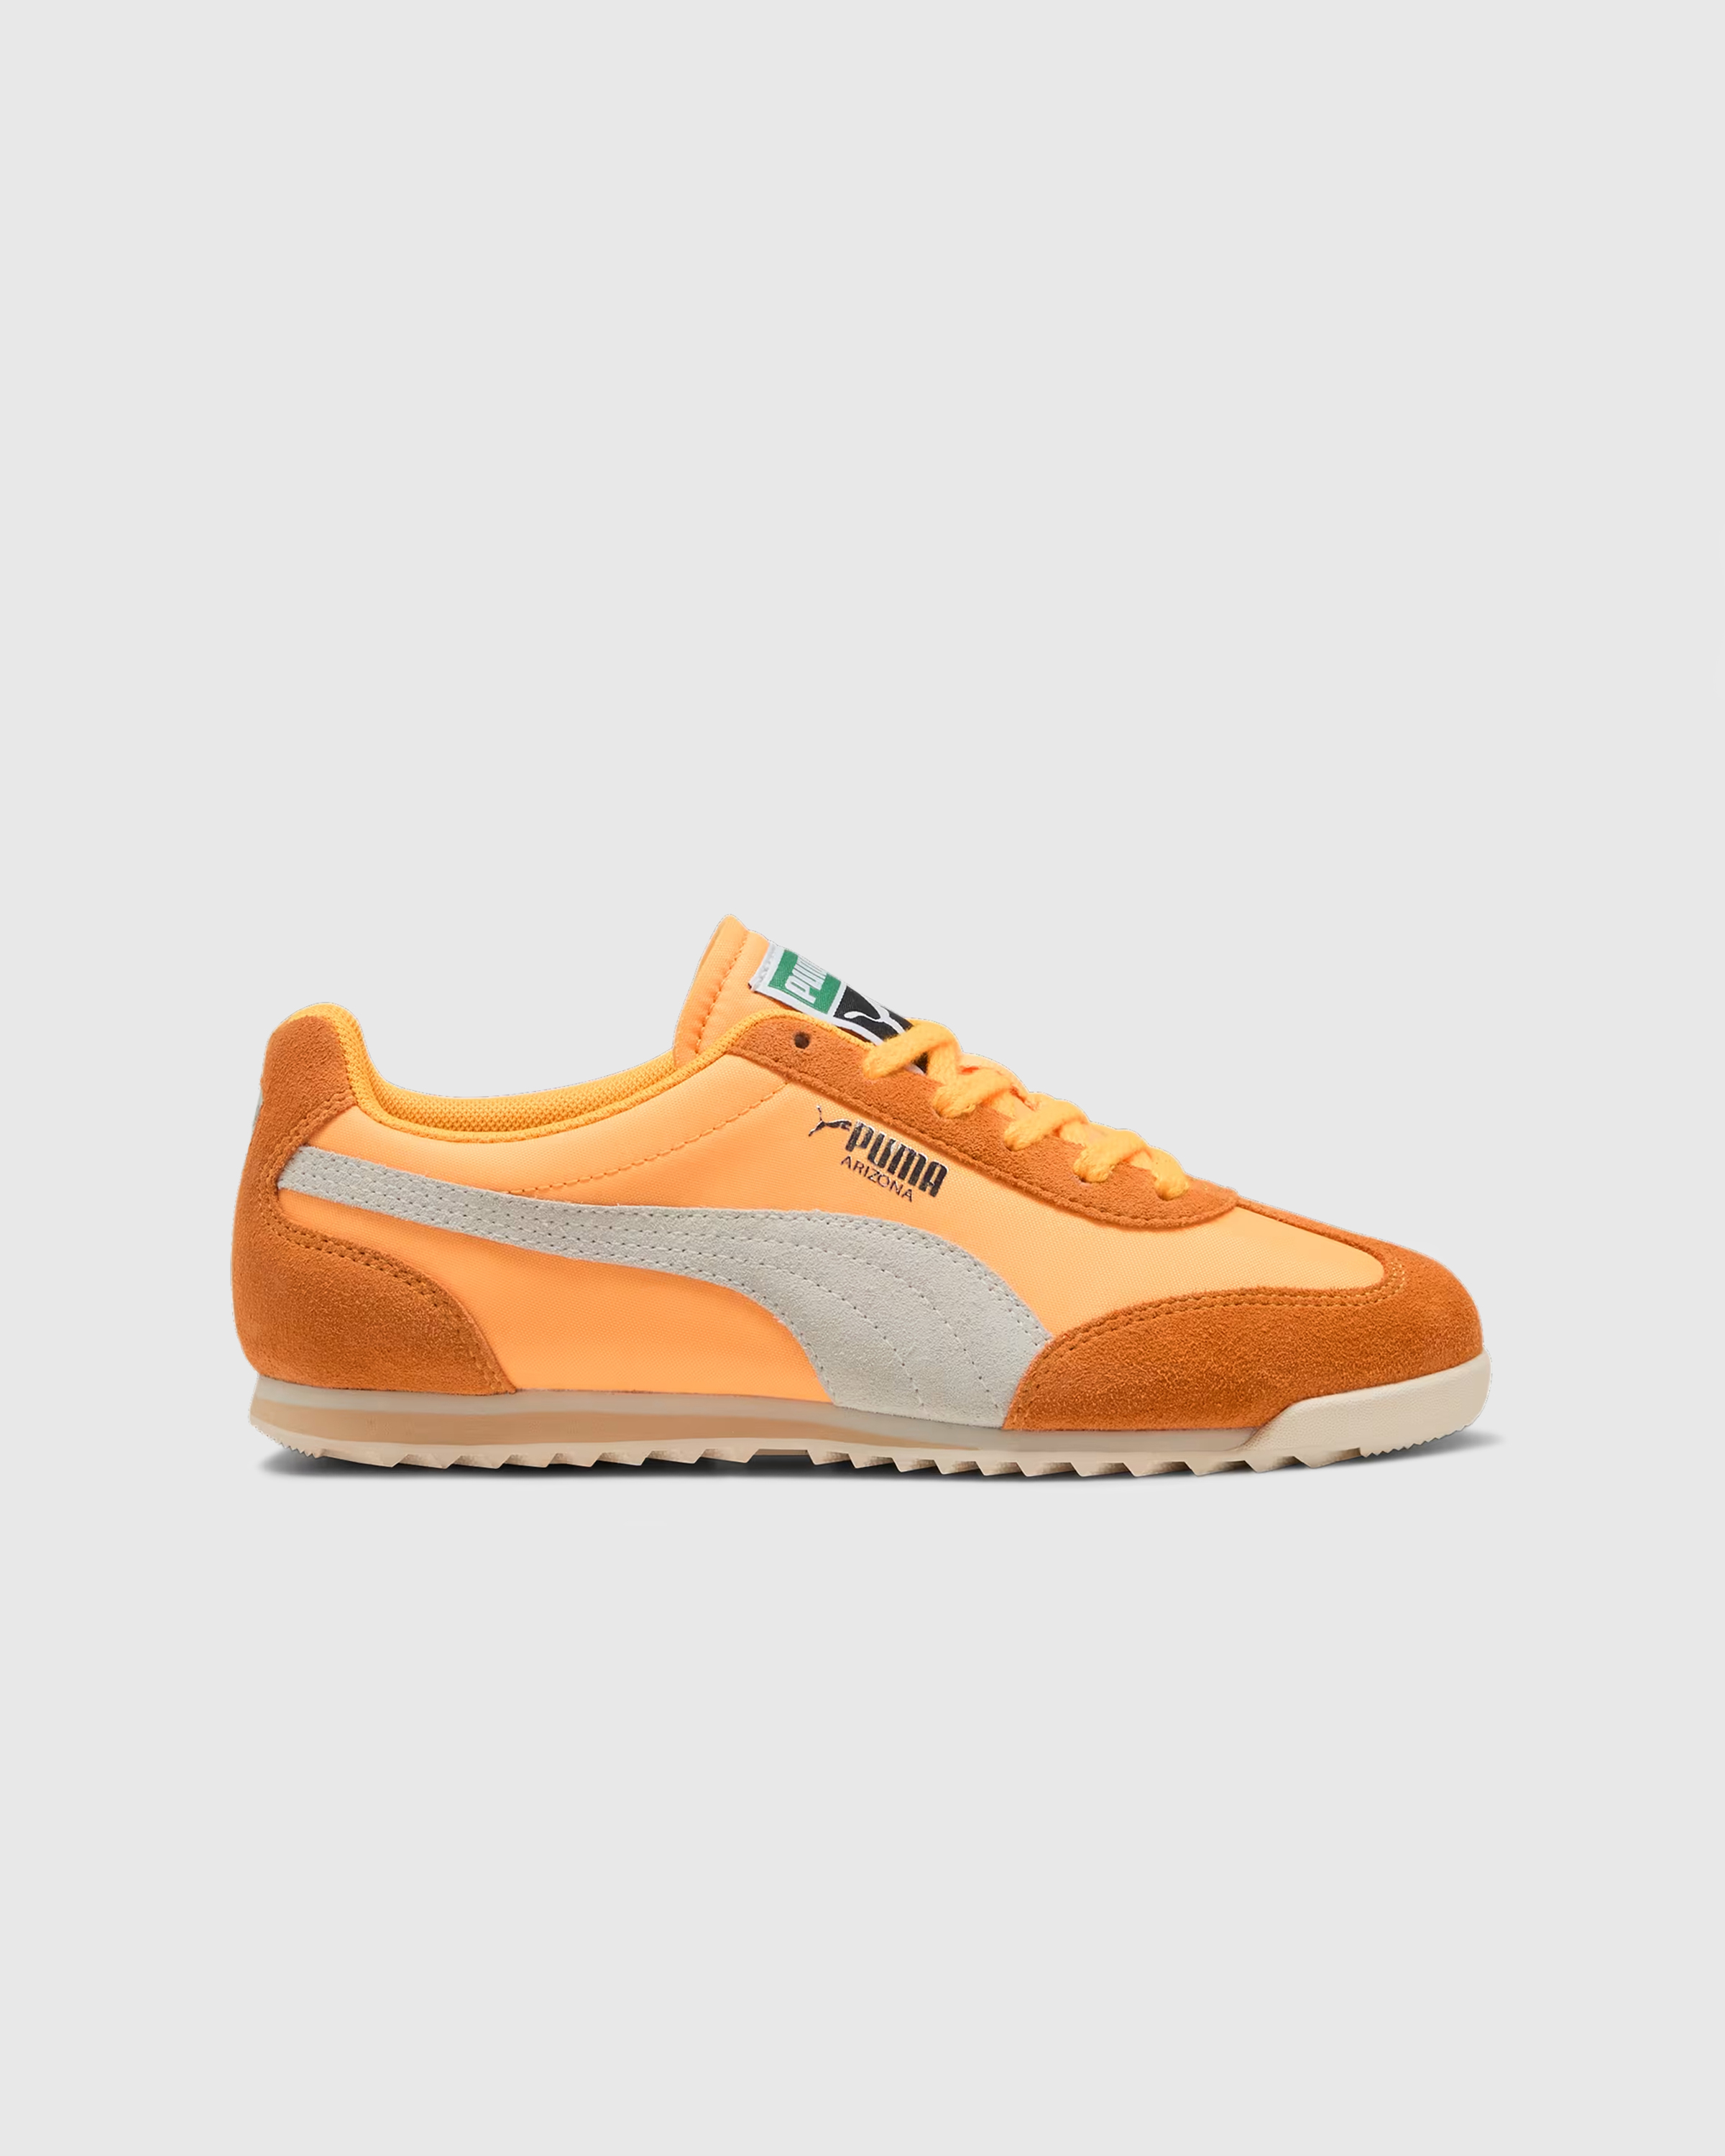 Puma – Arizona Nylon Sun Stream/Vapor Grey - Low Top Sneakers - Orange - Image 1